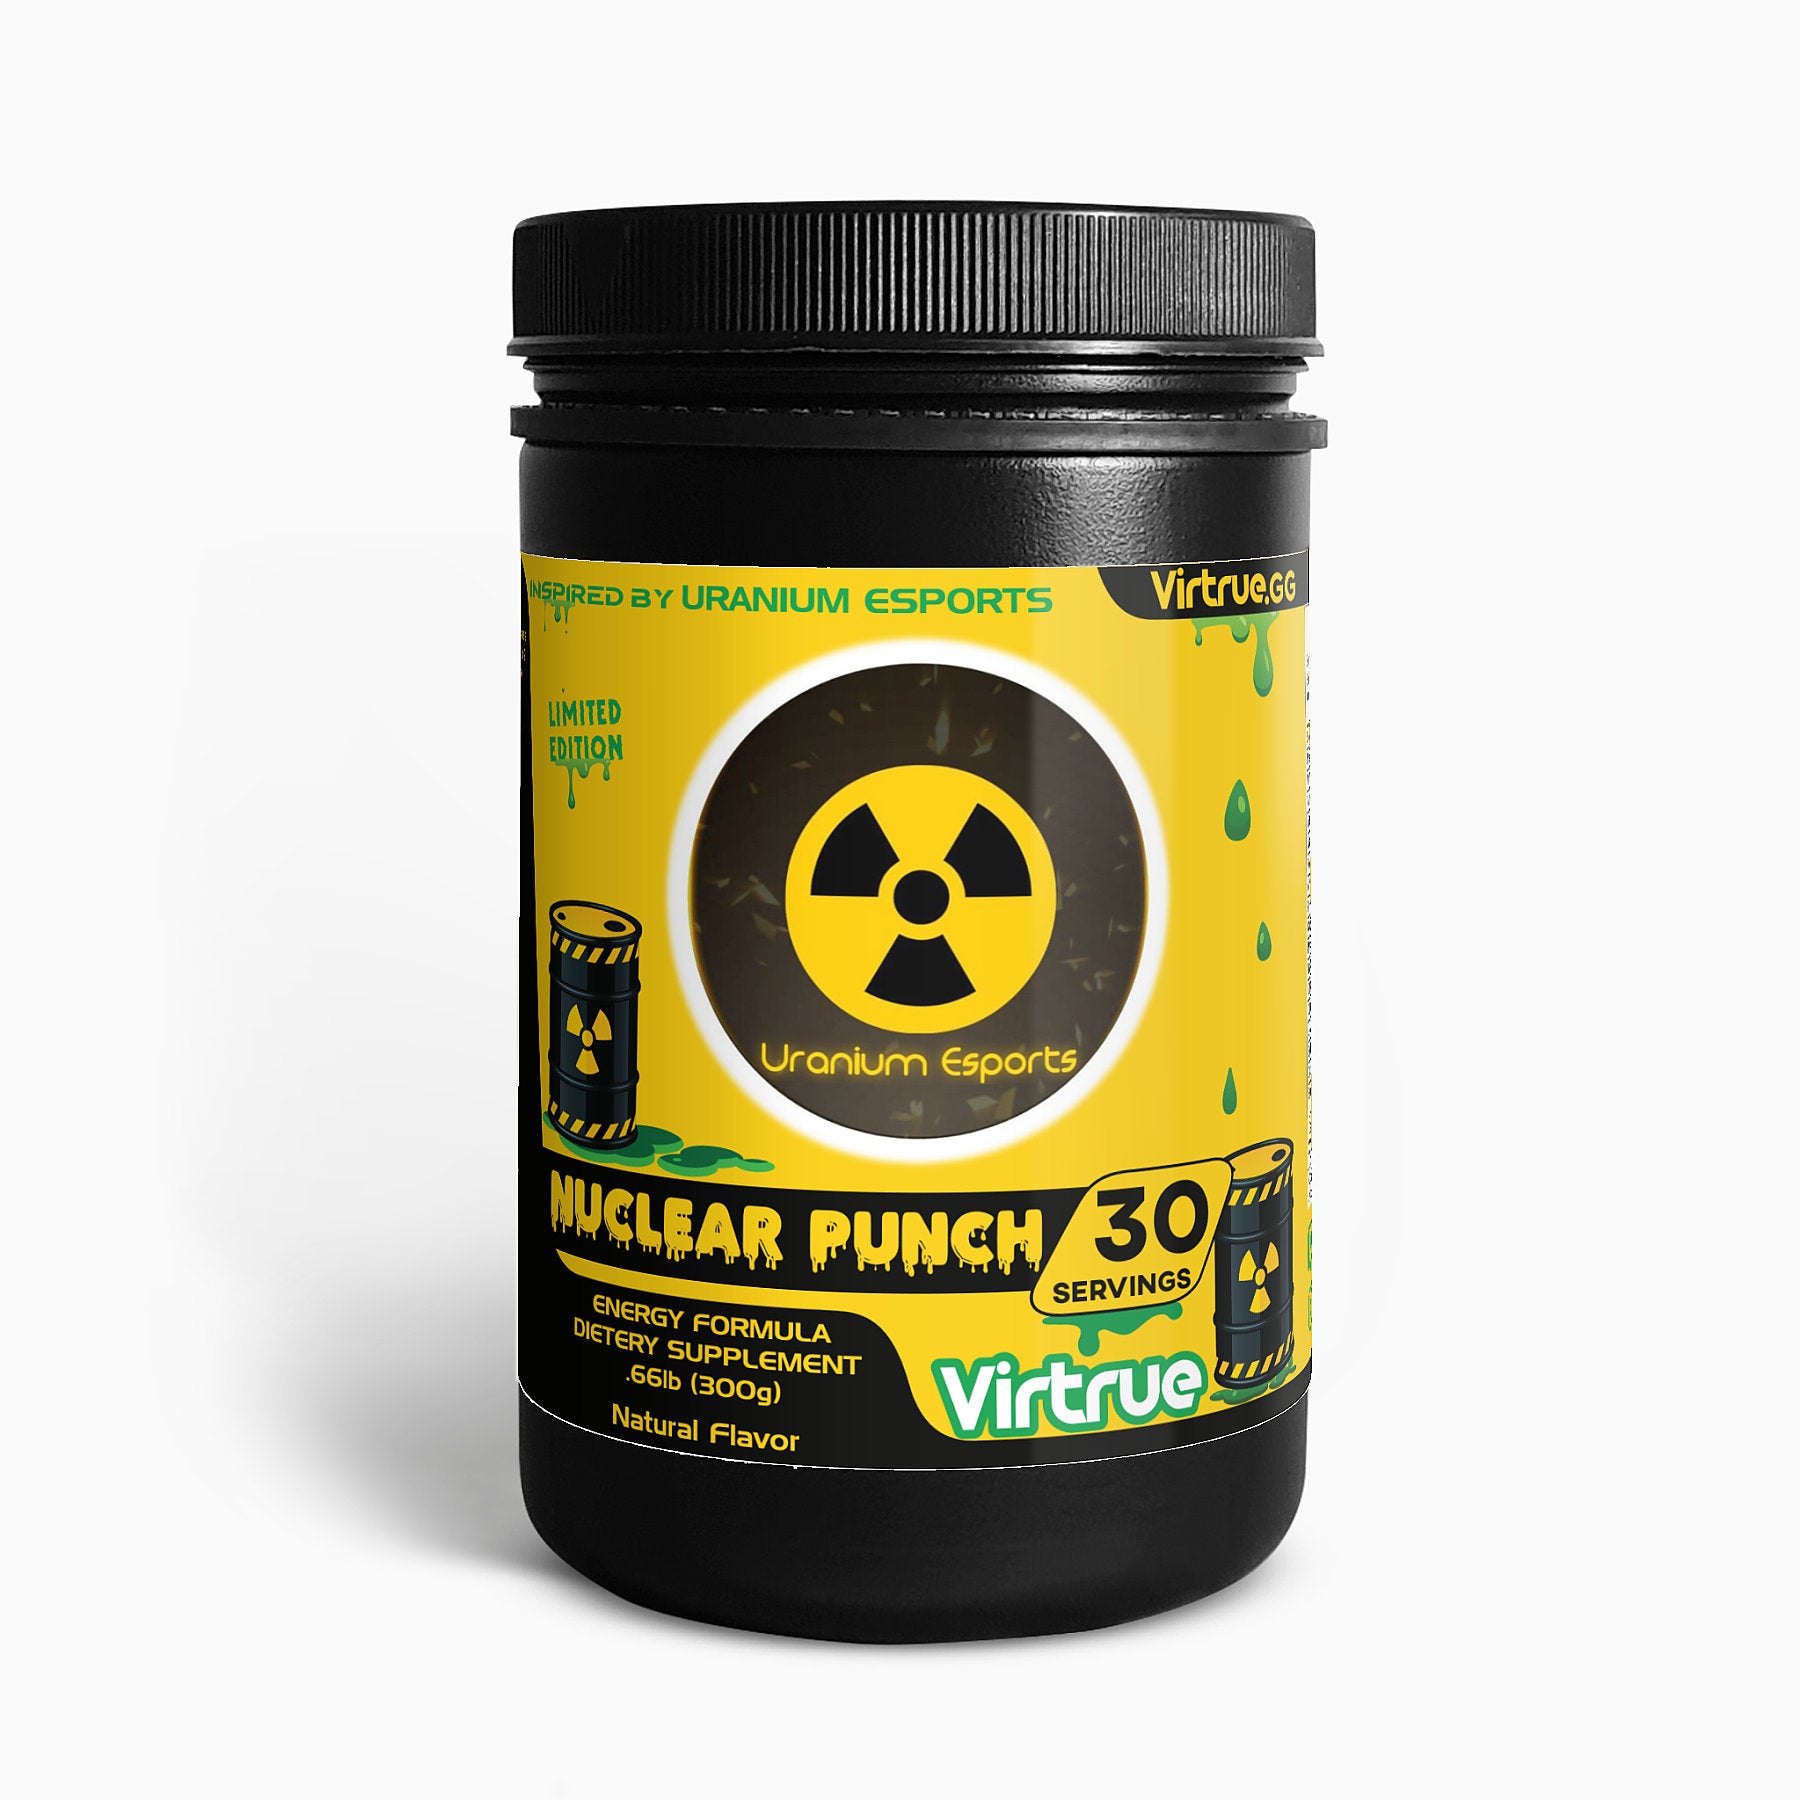 Nuclear Punch Energy Formula - Inspired by Uranium Esports